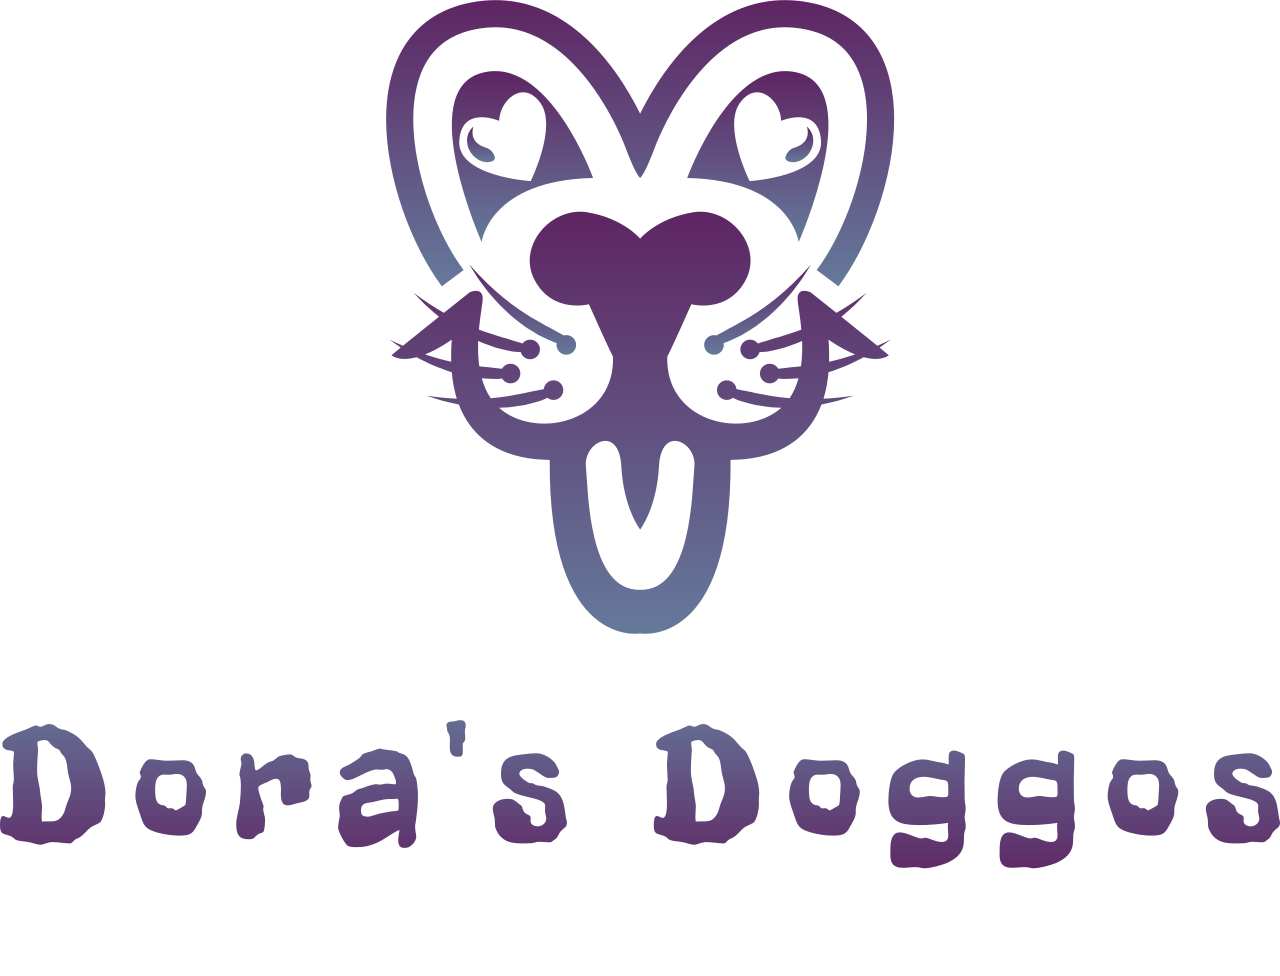 Dora's Doggos's logo